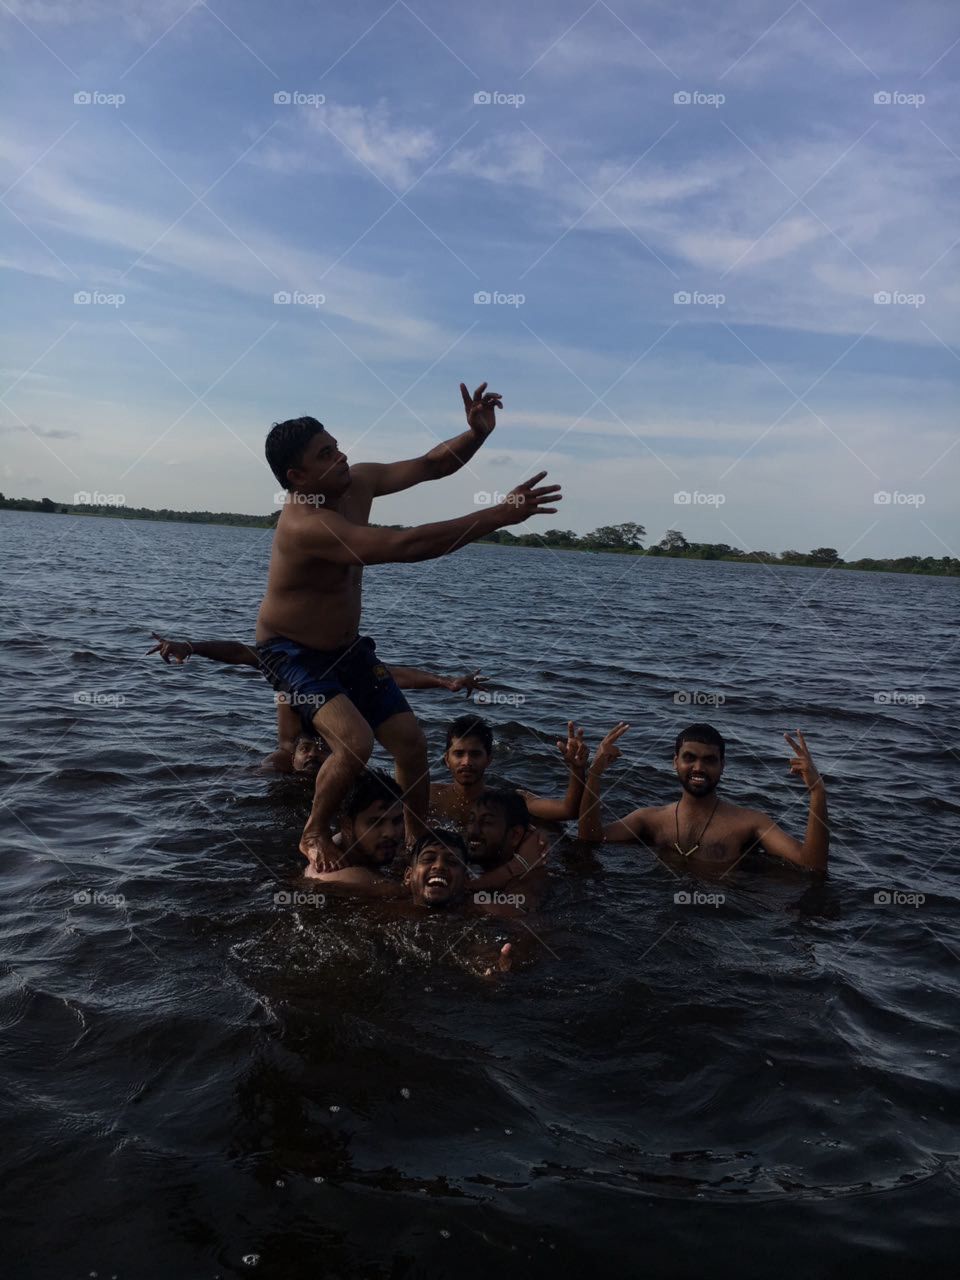 water sports in a lake in Sri Lanka